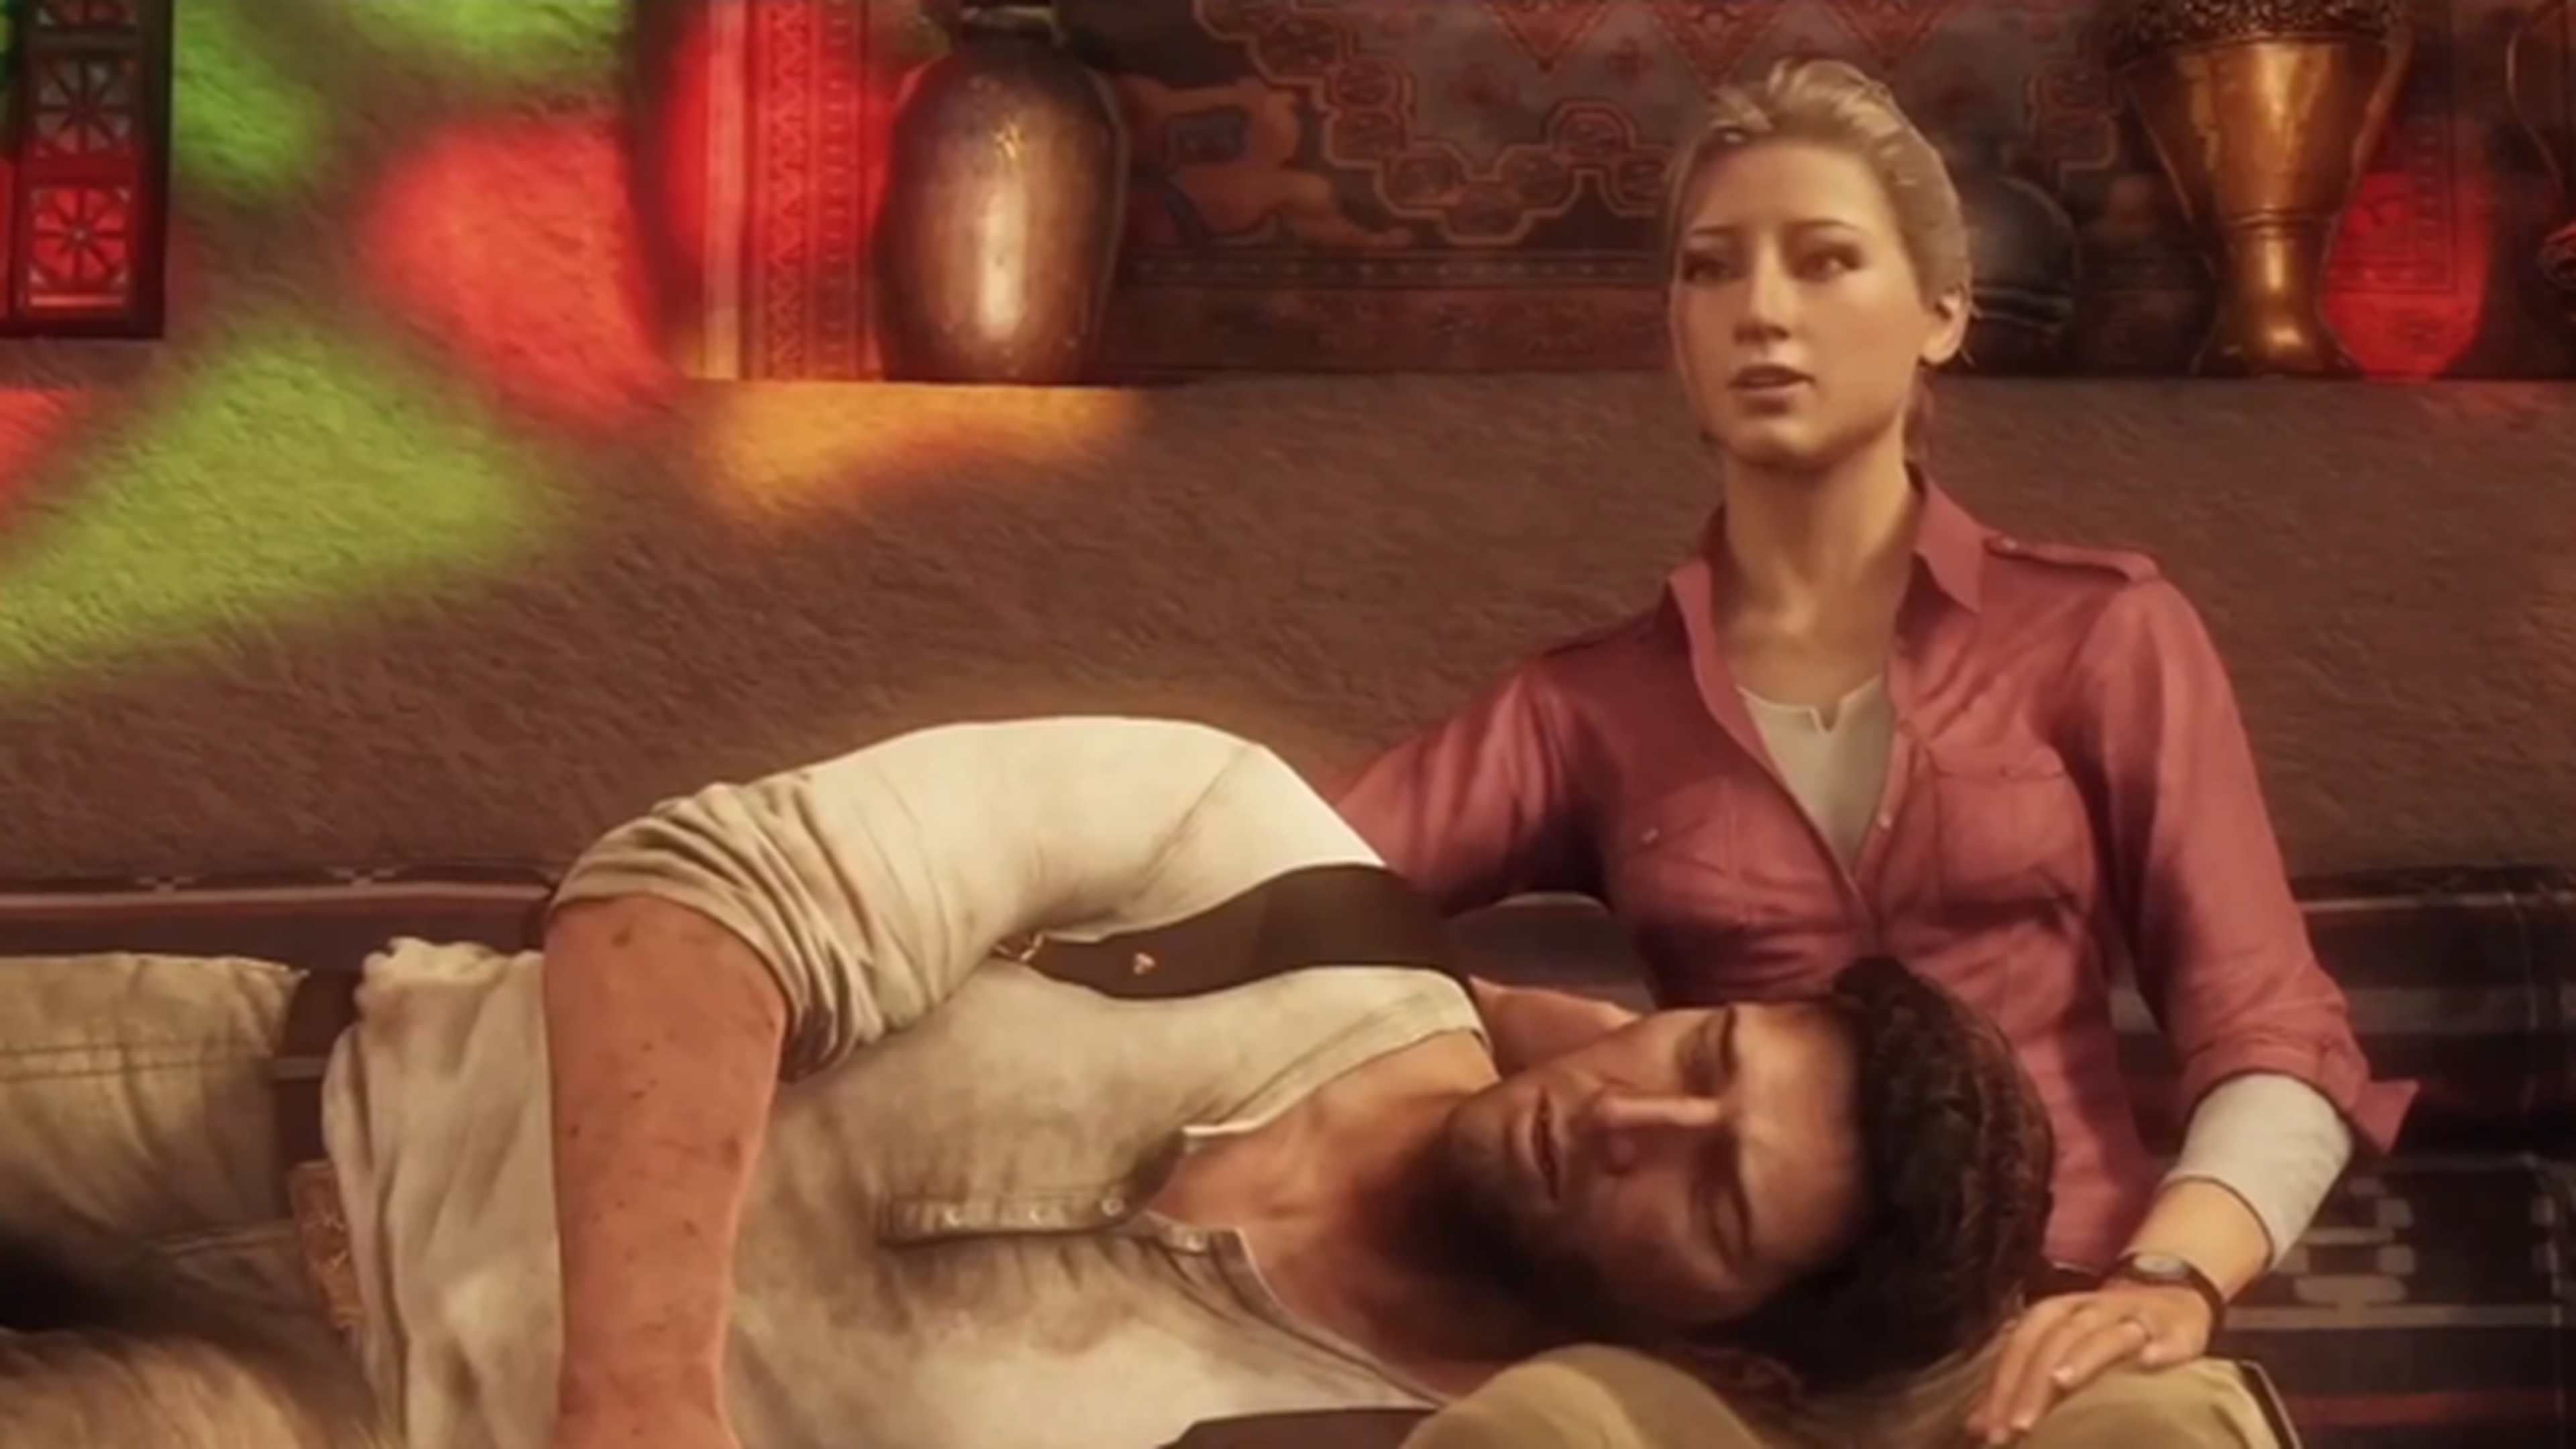 Especial San Valentín: momentos románticos en videojuegos